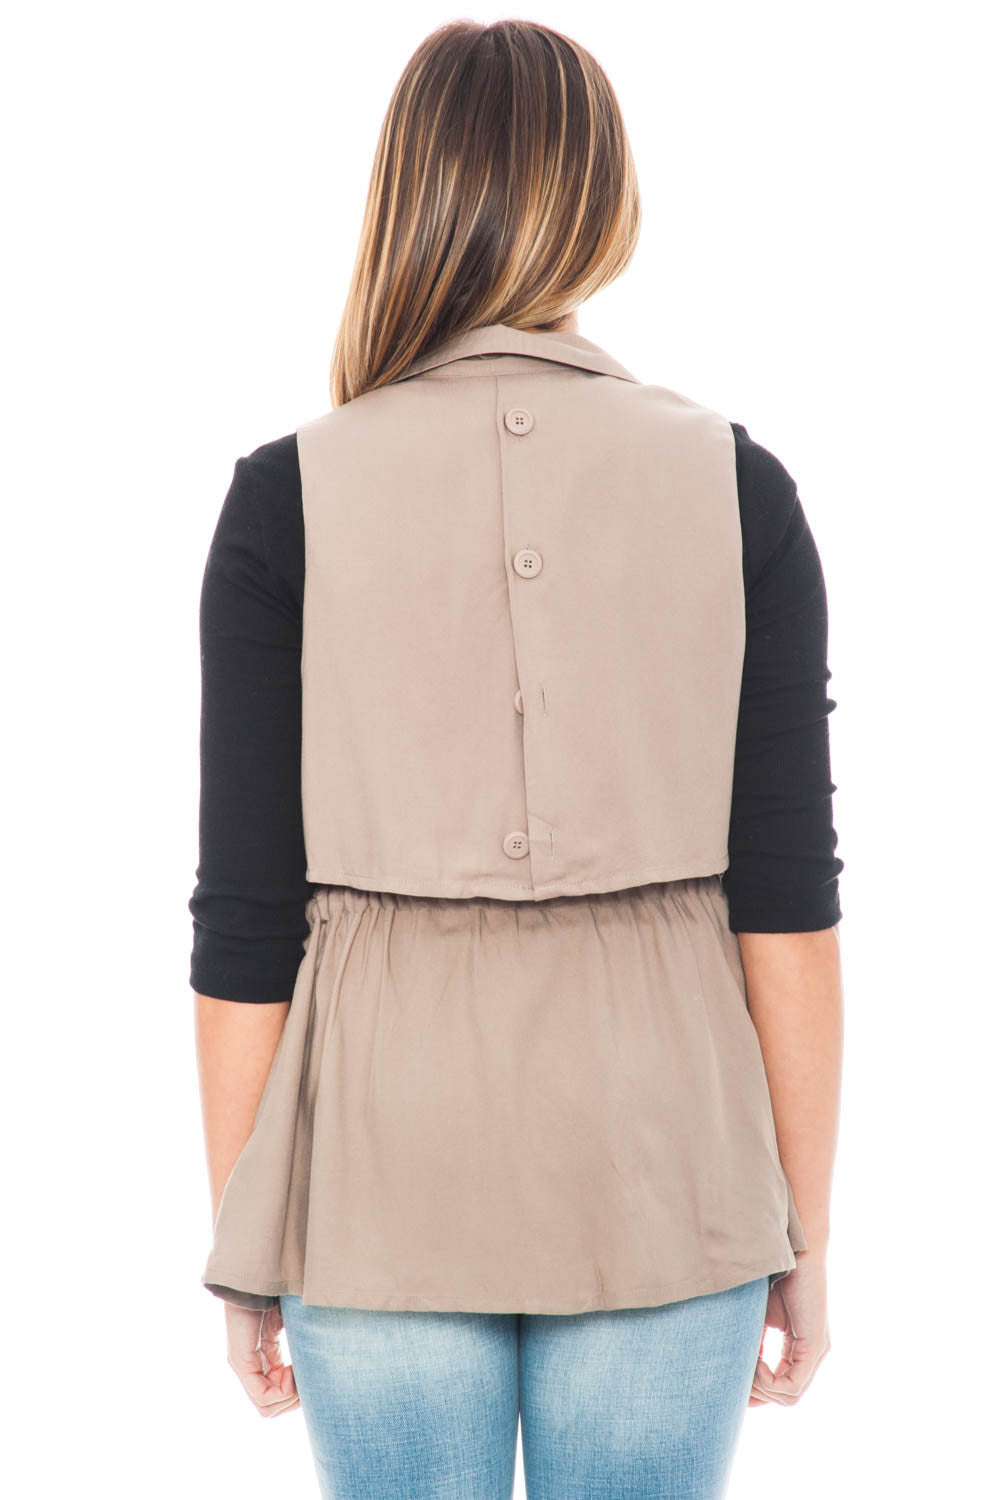 Vest - Cider by BB Dakota overlap vest with a drawstring waist